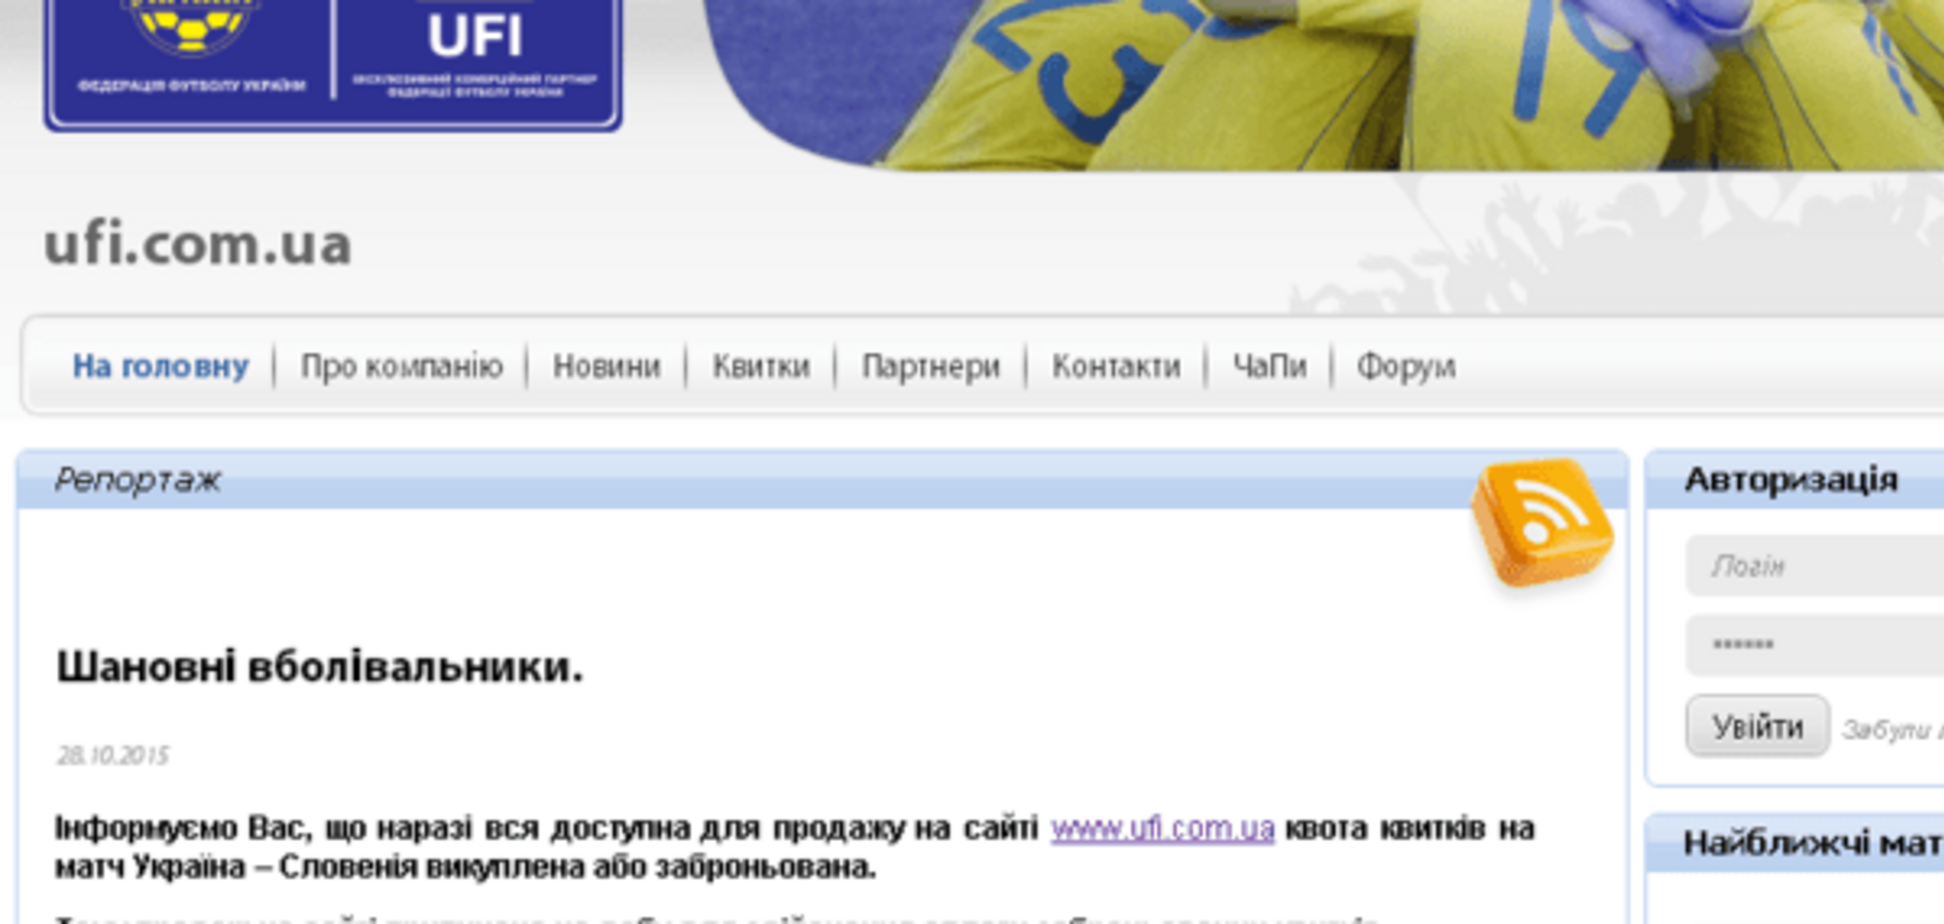 Продажа билетов на матч Украина – Словения приостановлена